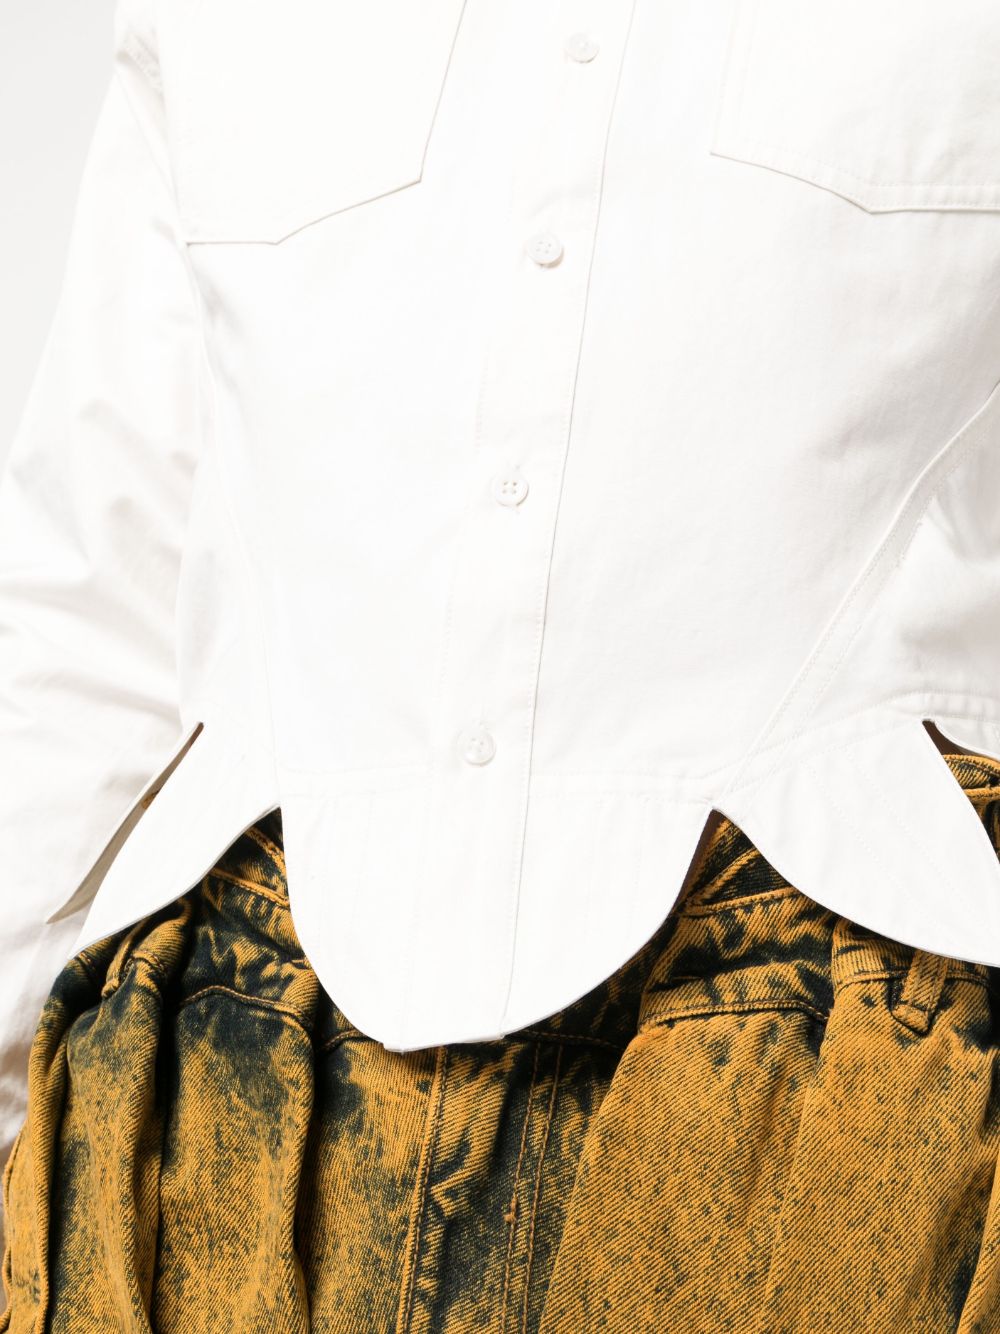 Kimhekim Reconstructed Denim Corset Top with Shirt Detailing